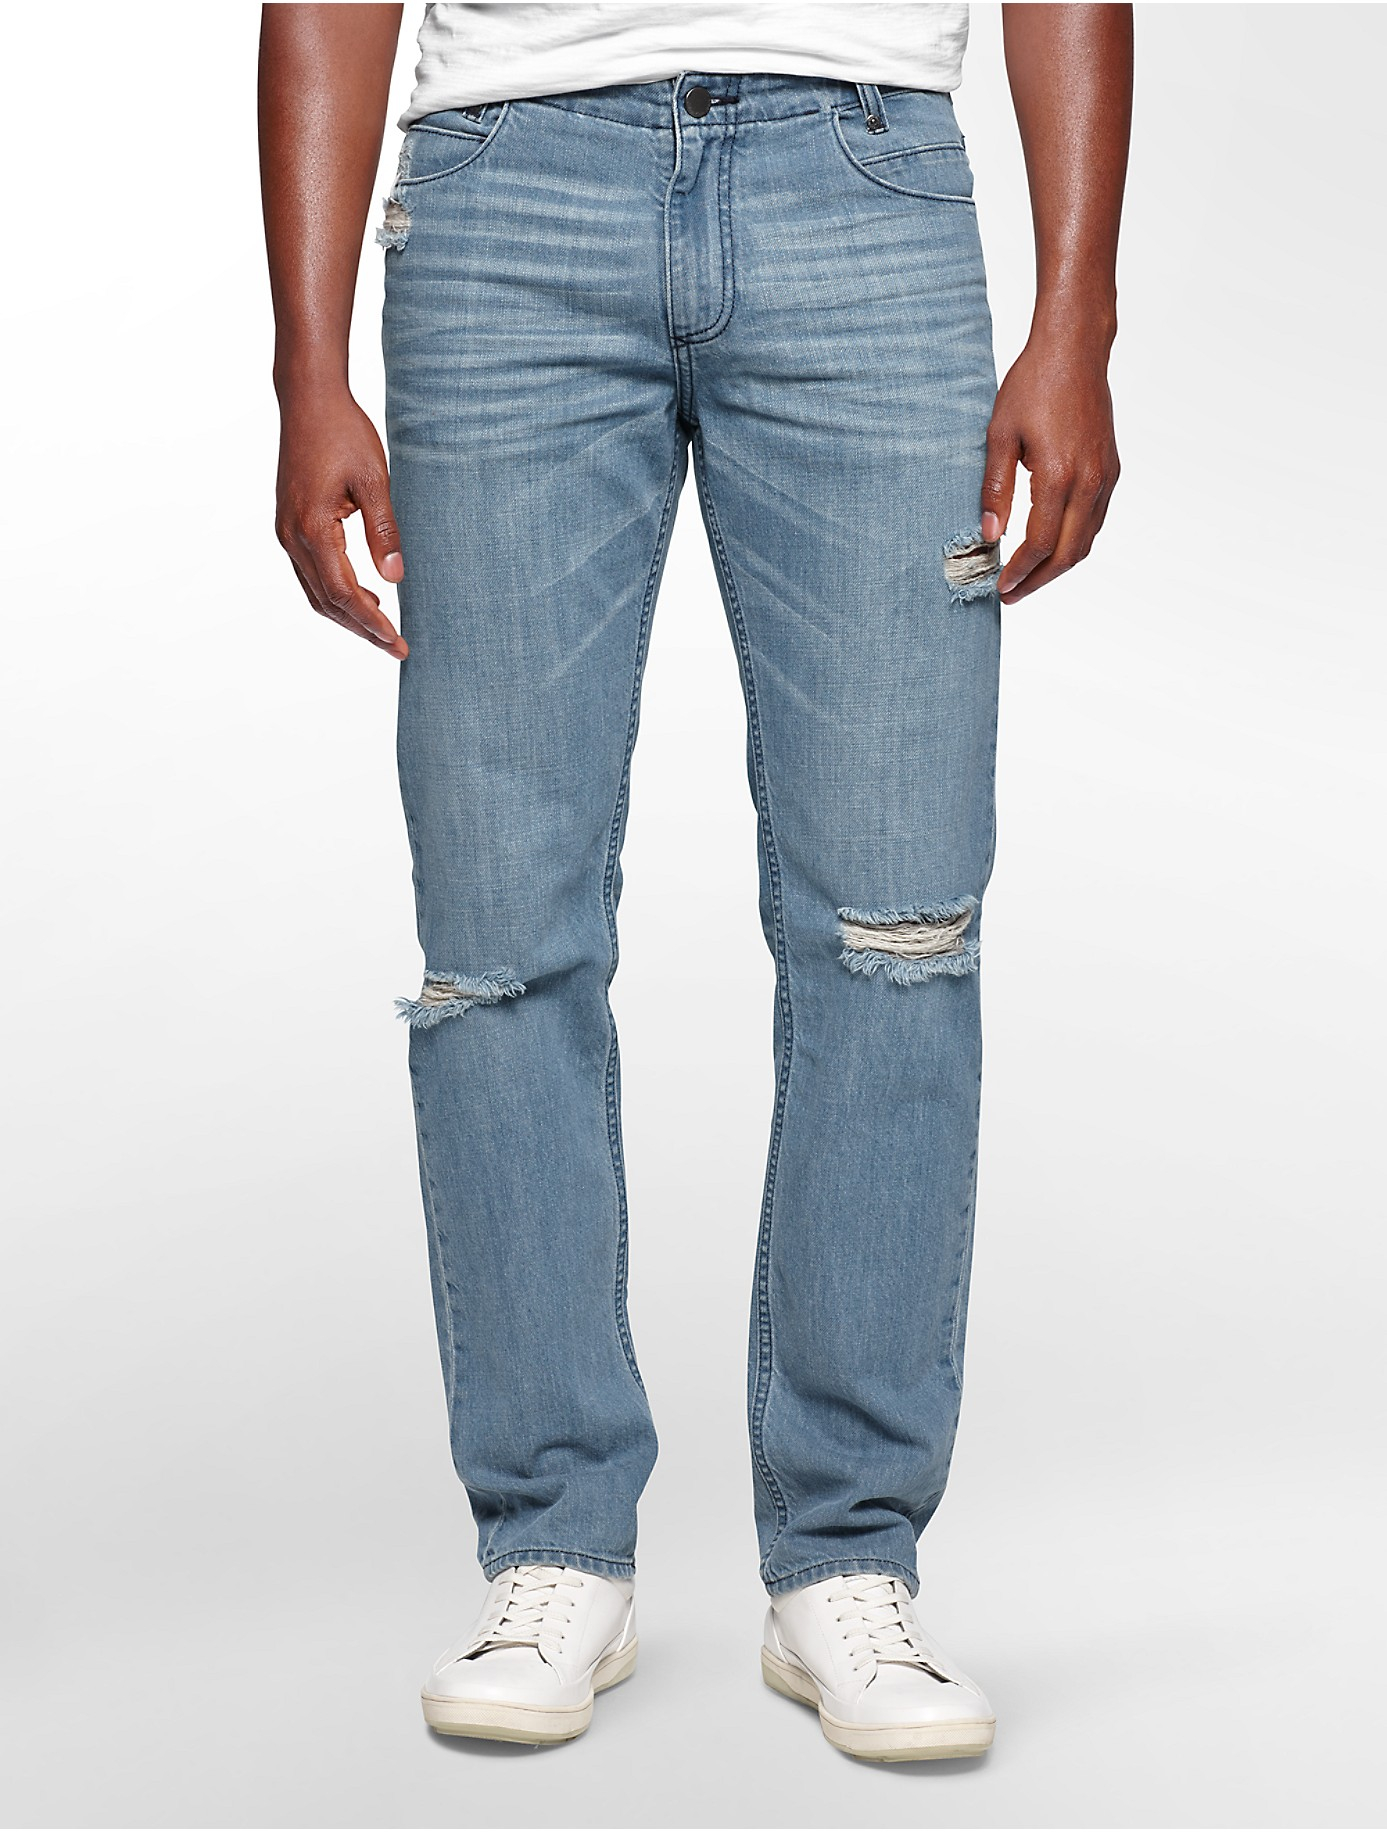 Calvin klein Jeans Slim Straight Leg Destroyed Slate Blue Wash Jeans in